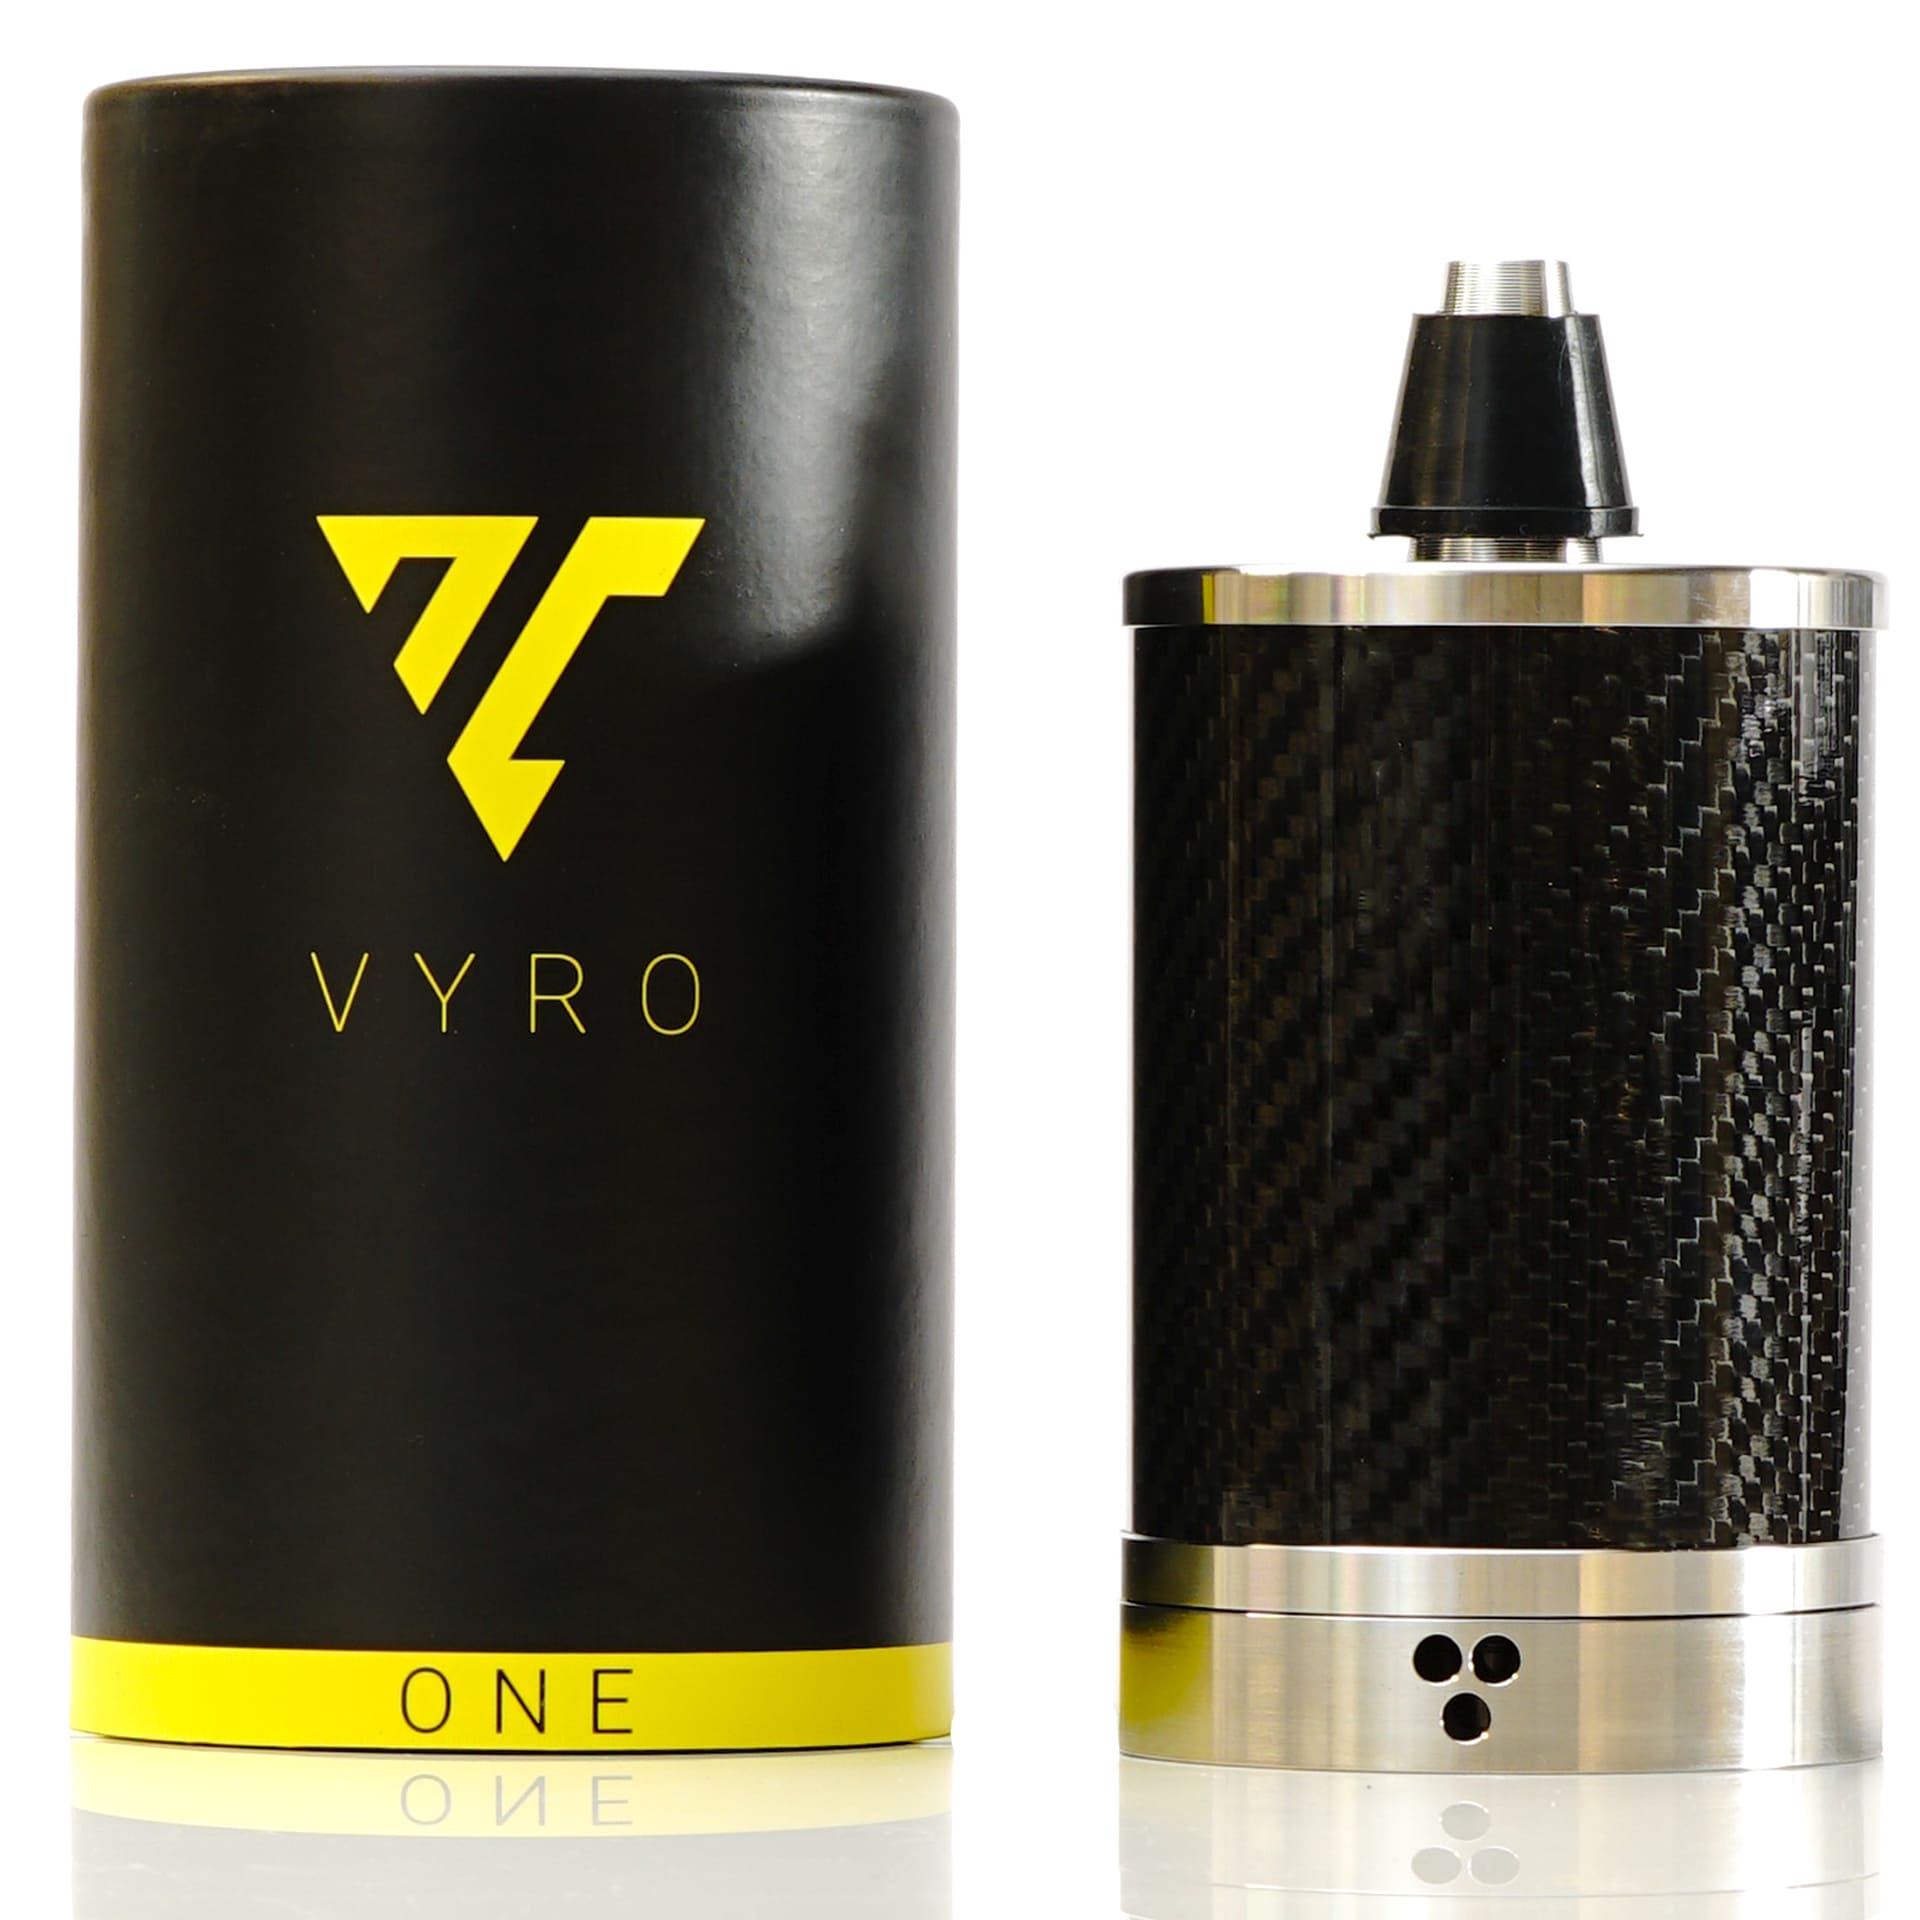 Vyro / One / Carbon Black